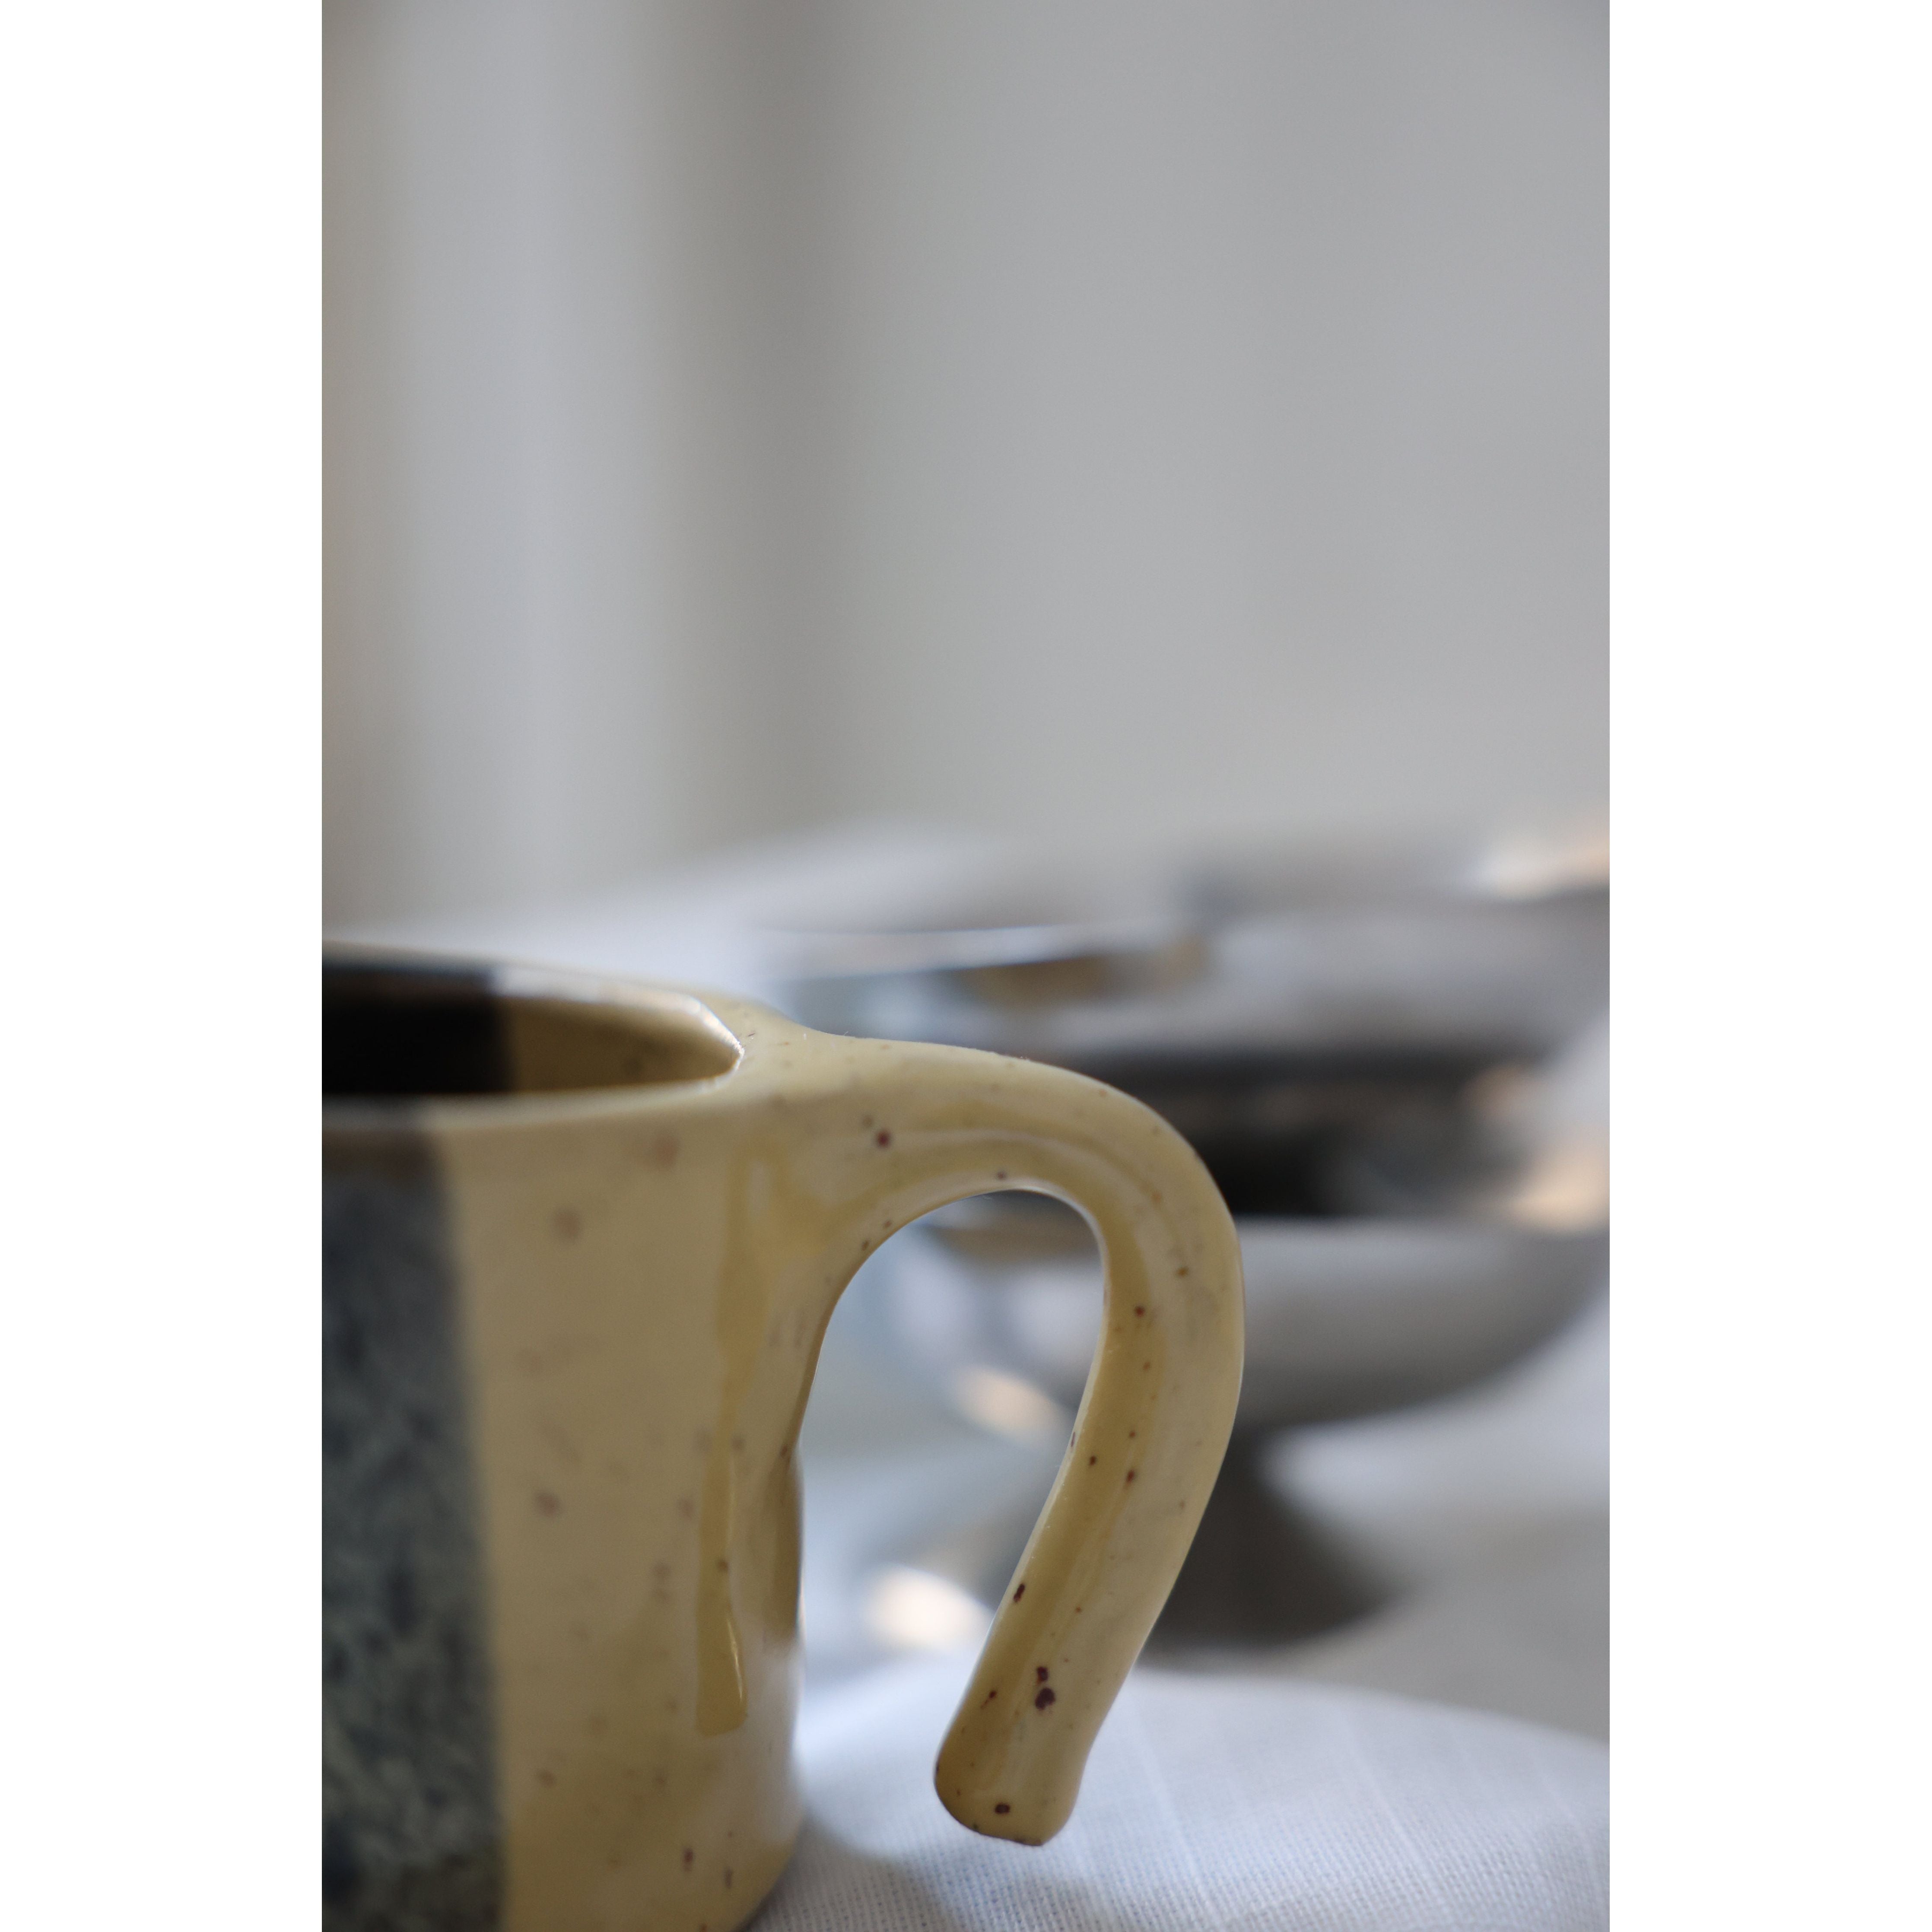 ⭒ ⋆  SUPER MOON ⋆  ⭒ coffee mug